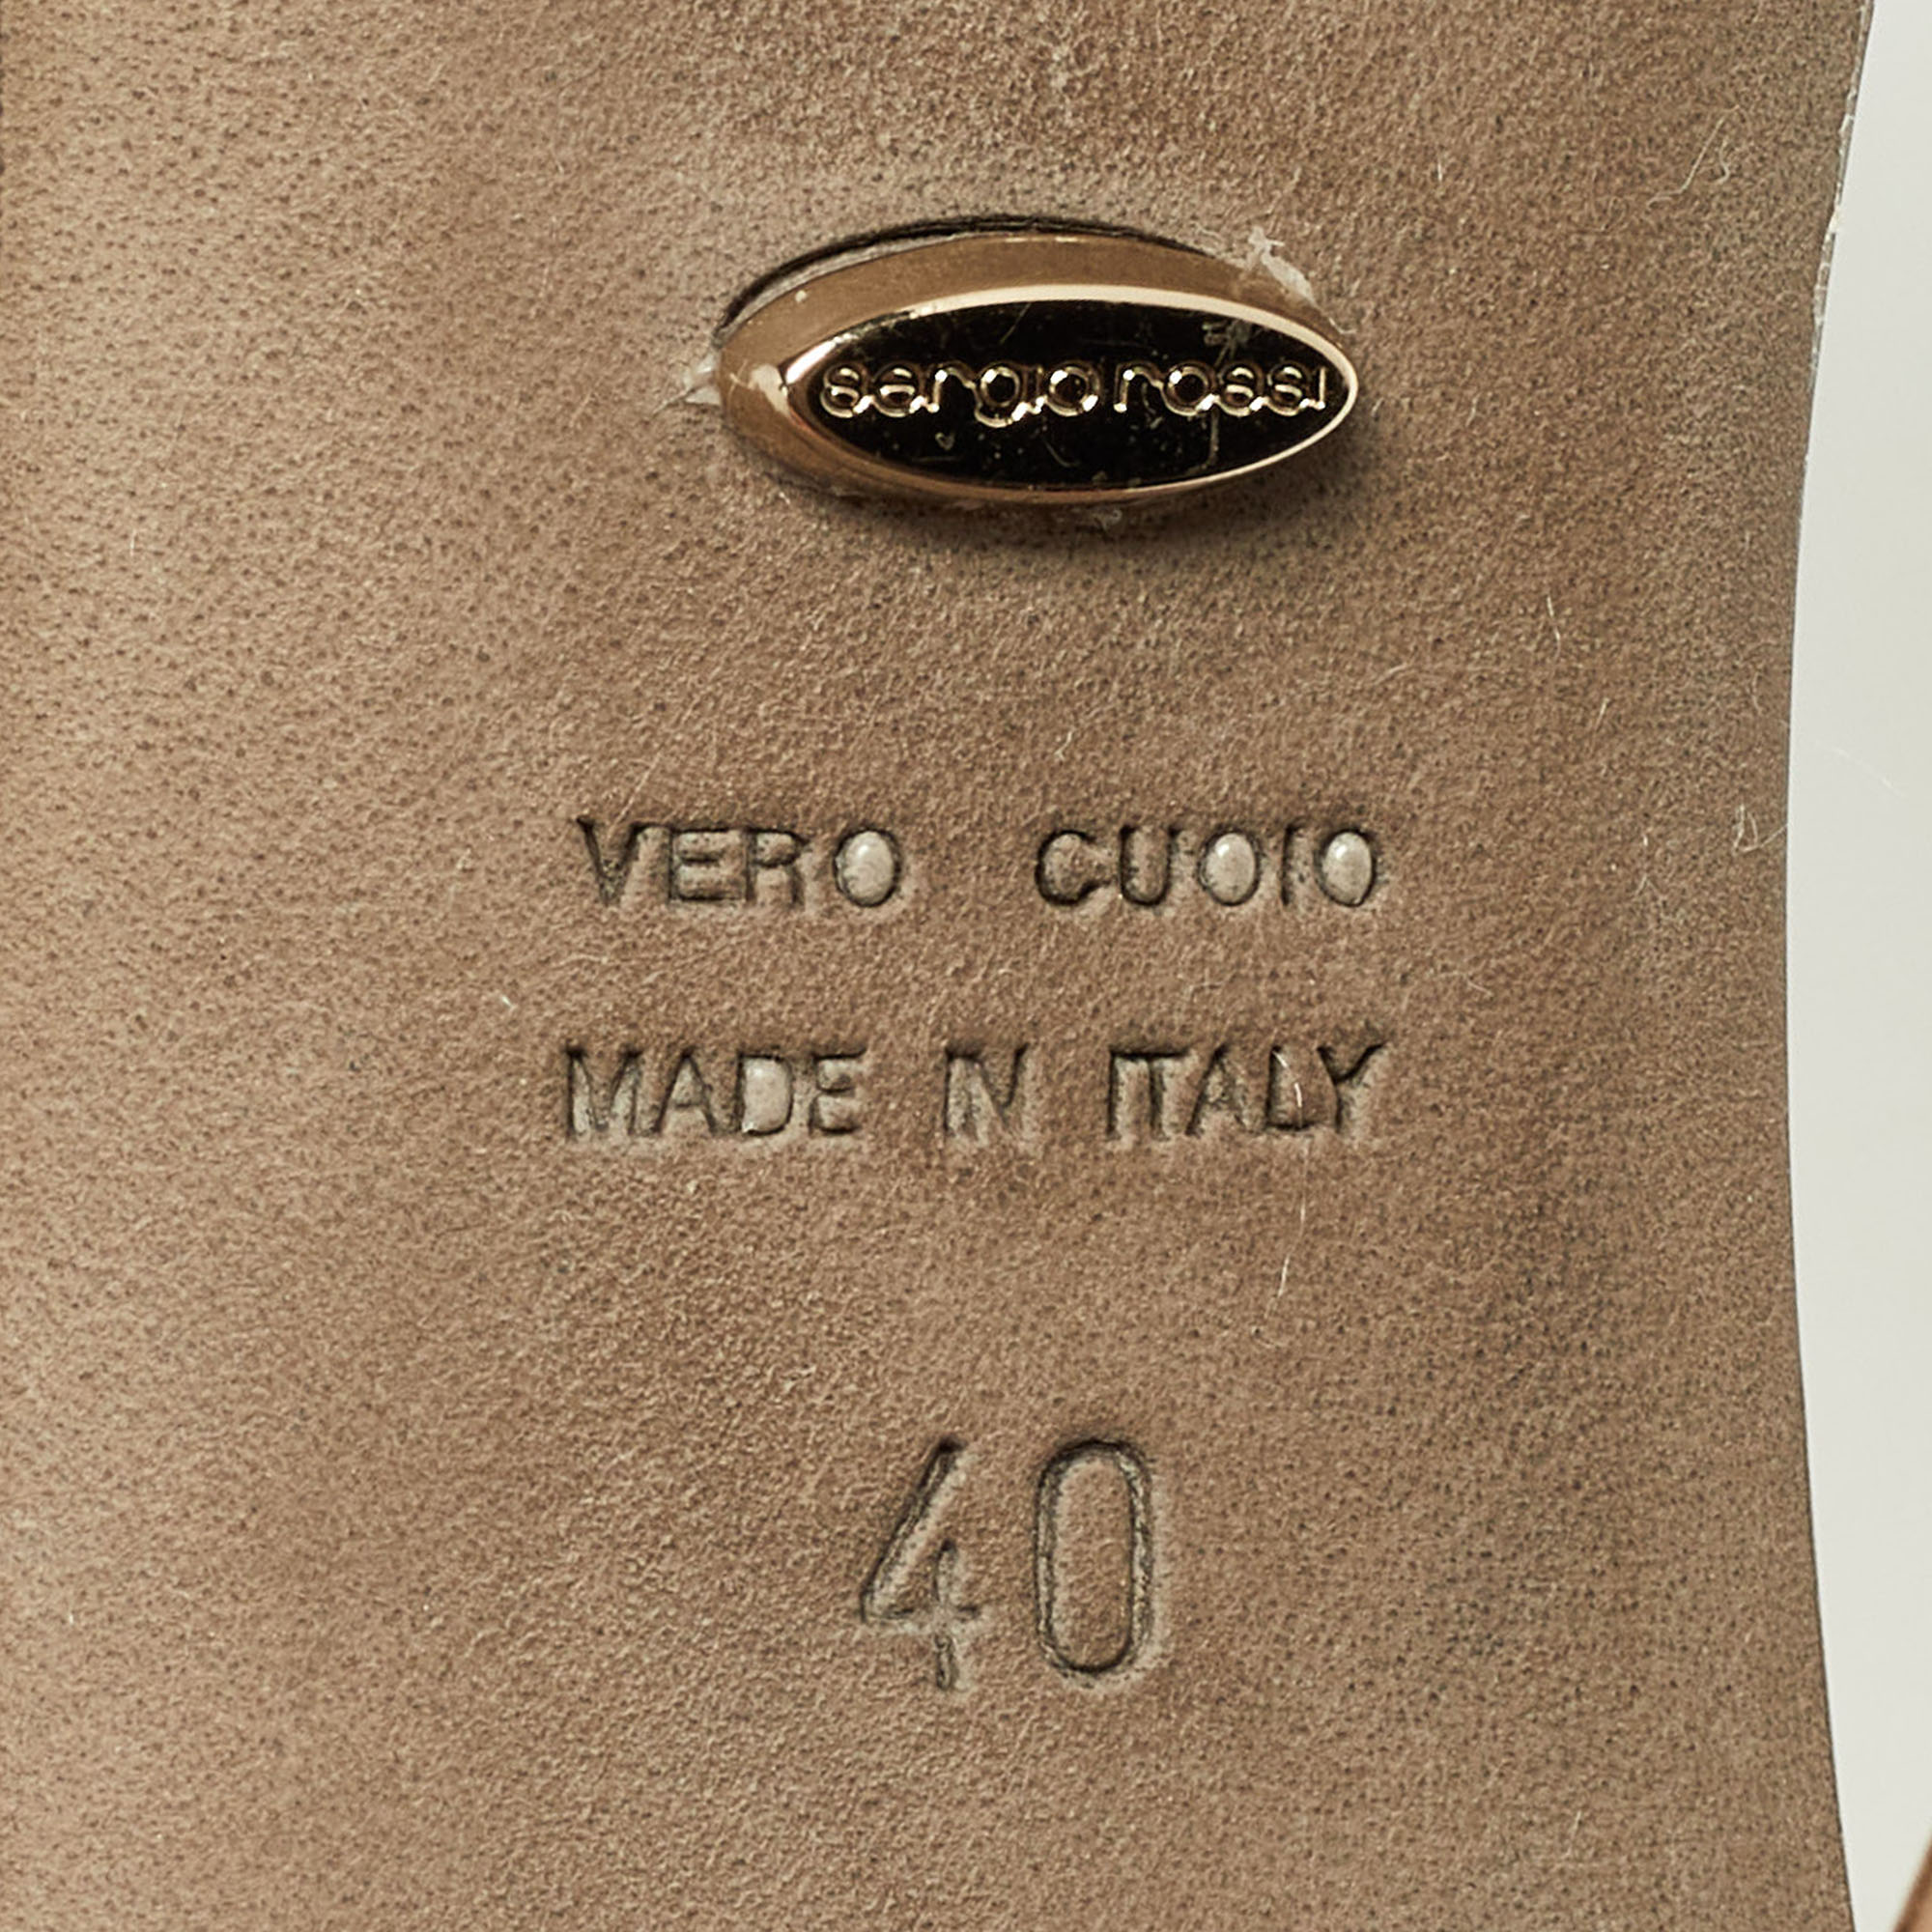 Sergio Rossi Beige Patent Leather Strappy Platform Sandals Size 40